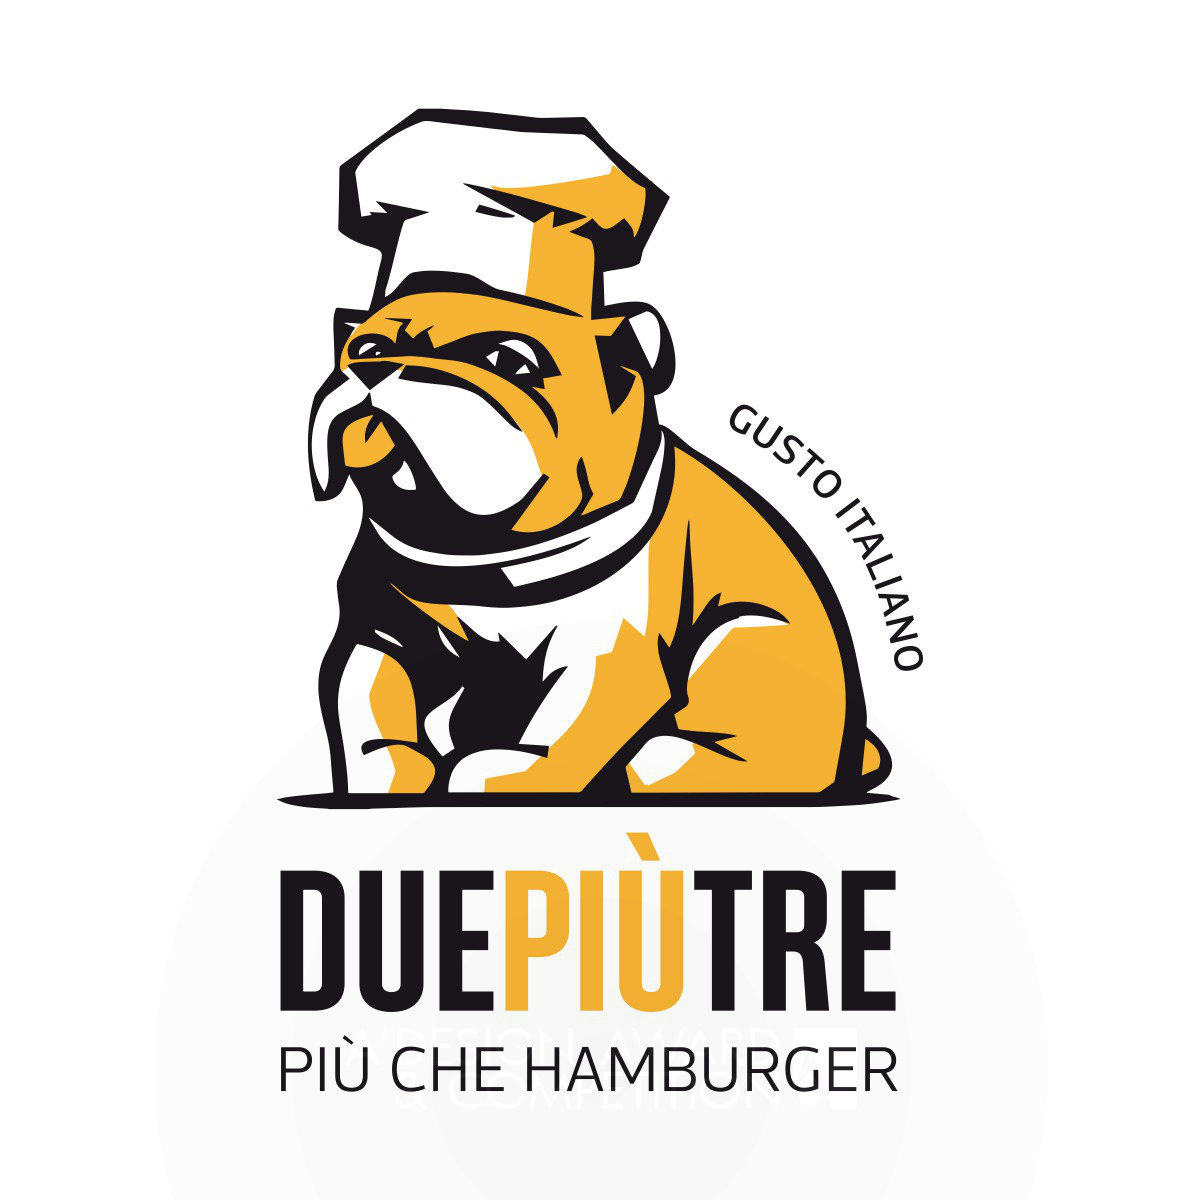 DuePiuTre – Piu che Hamburger <b>Visual Identity